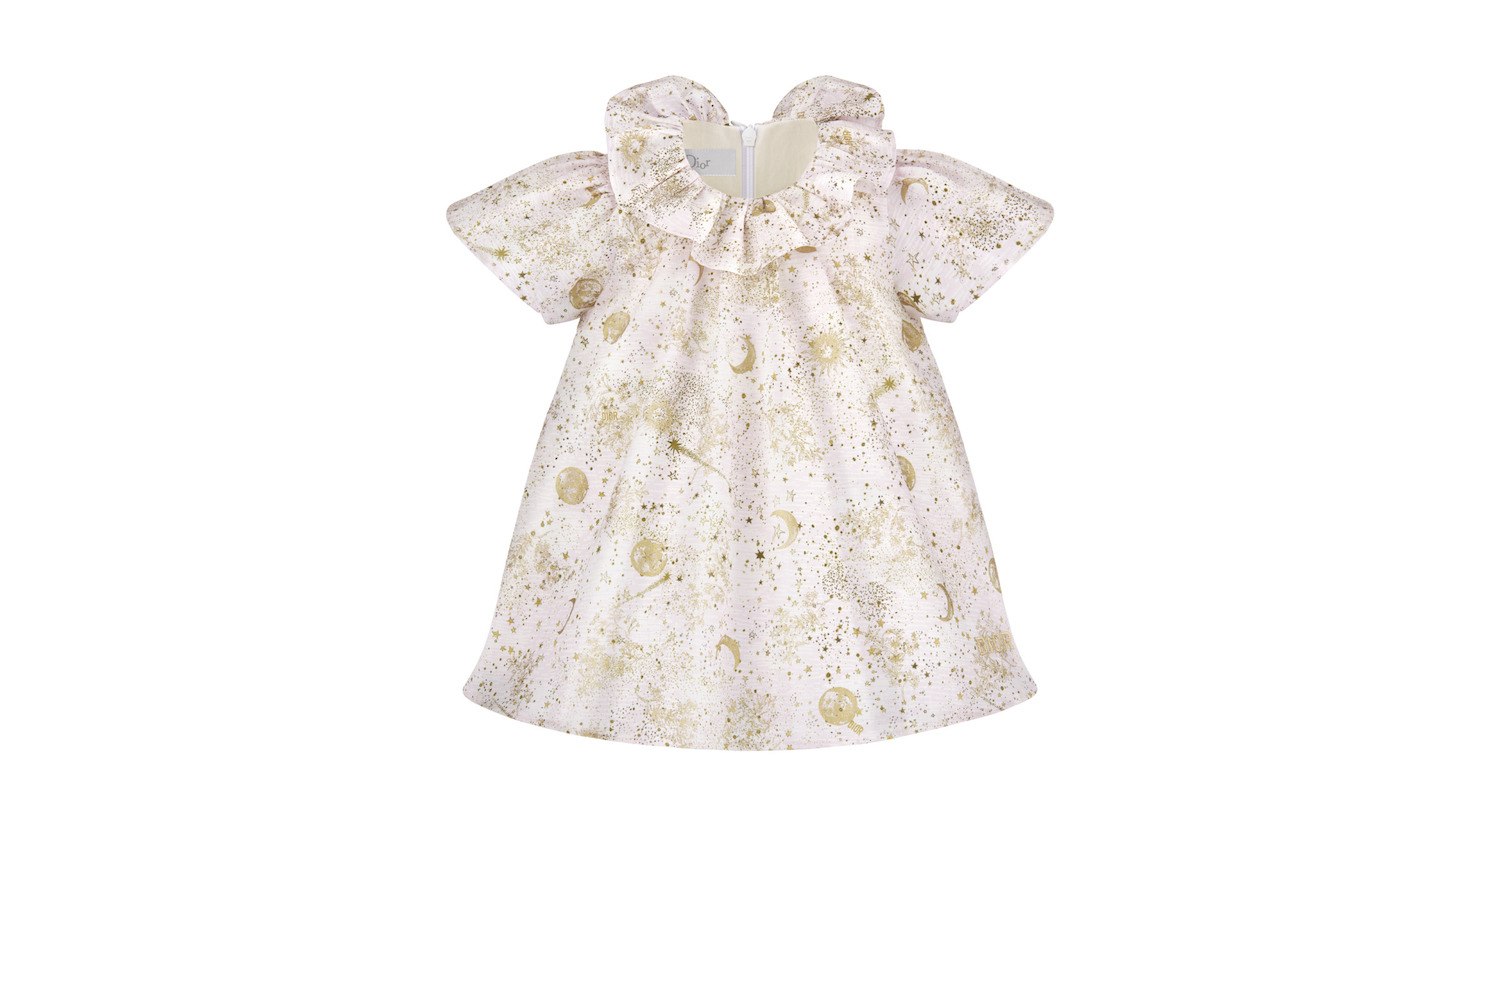  Baby Dior newborn girl's dress. Image courtesy of Dior.